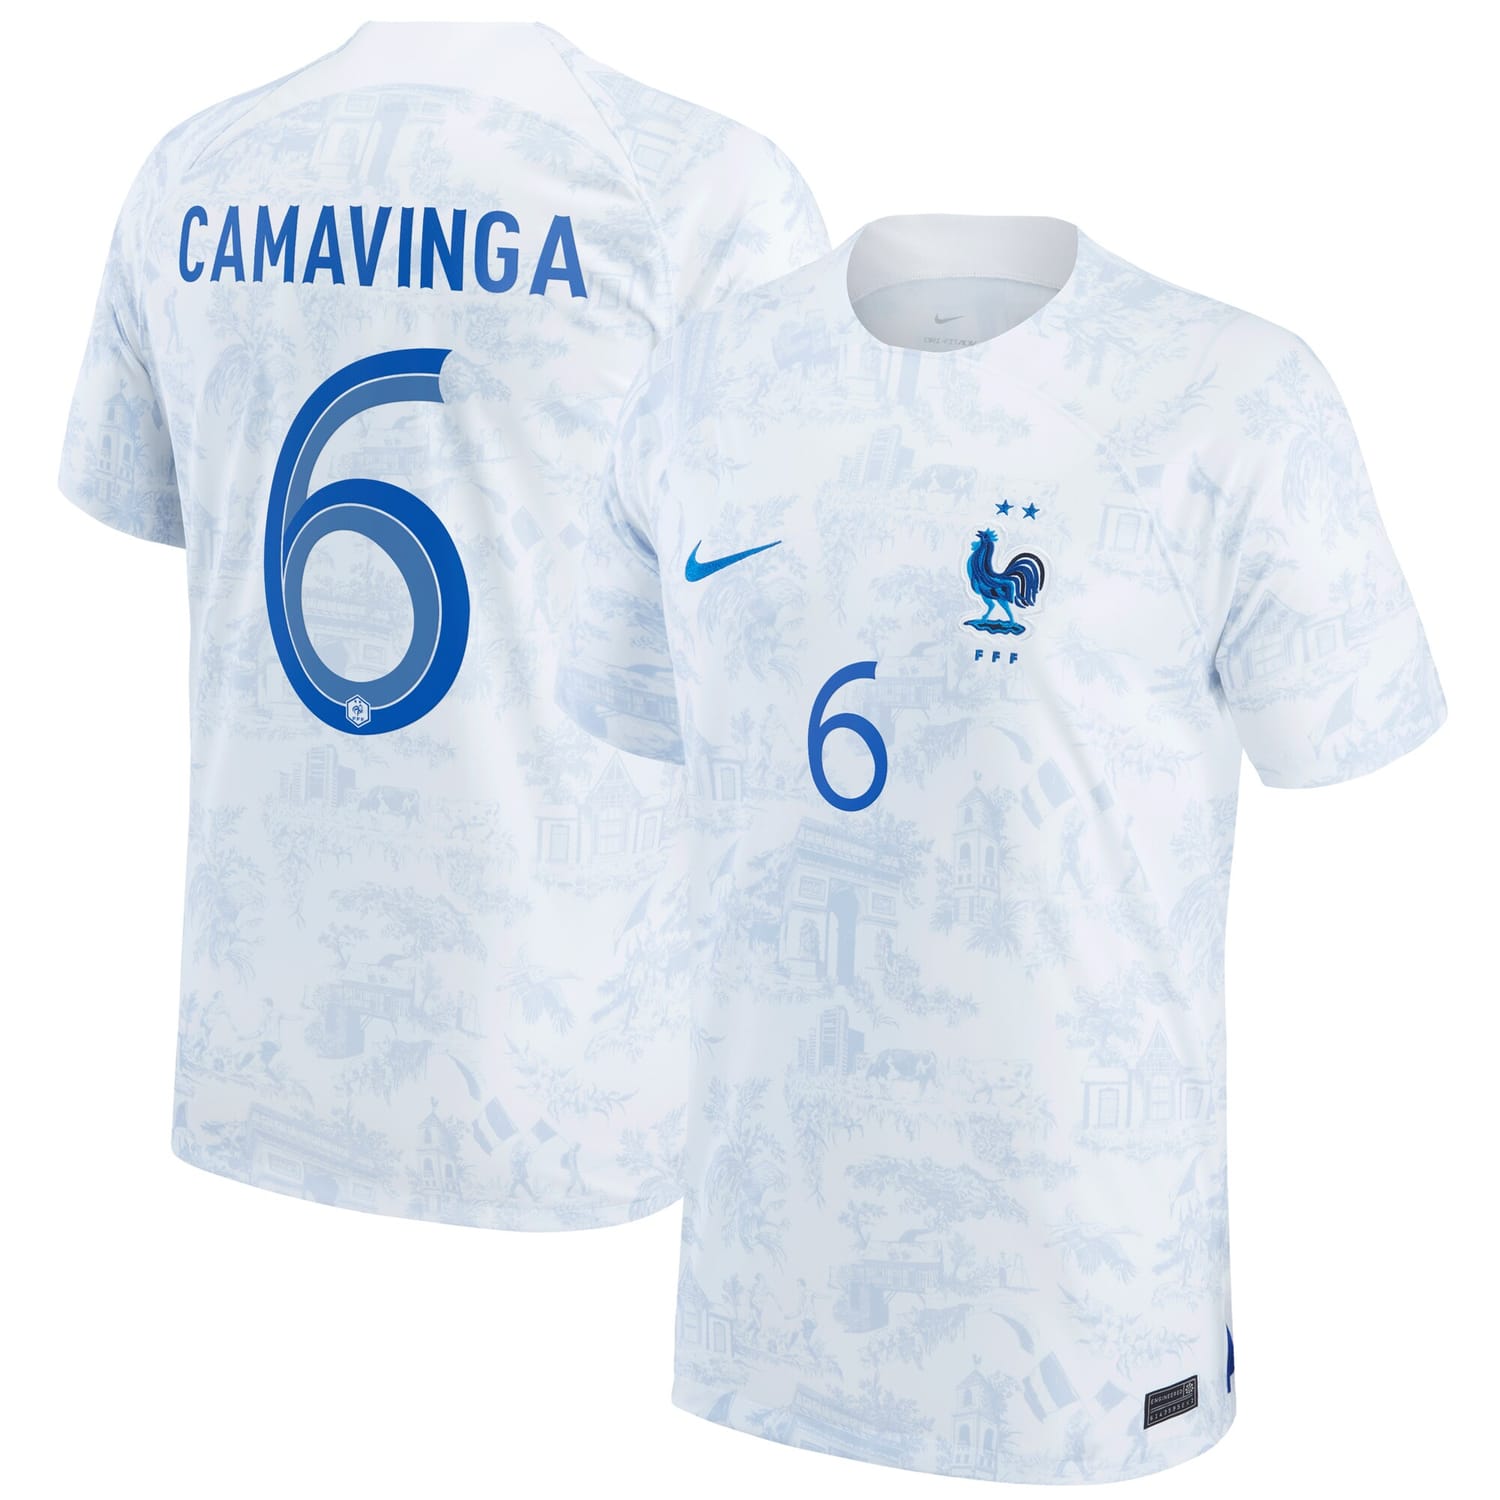 France National Team Away Jersey Shirt 2022 player Eduardo Camavinga 6 printing for Men